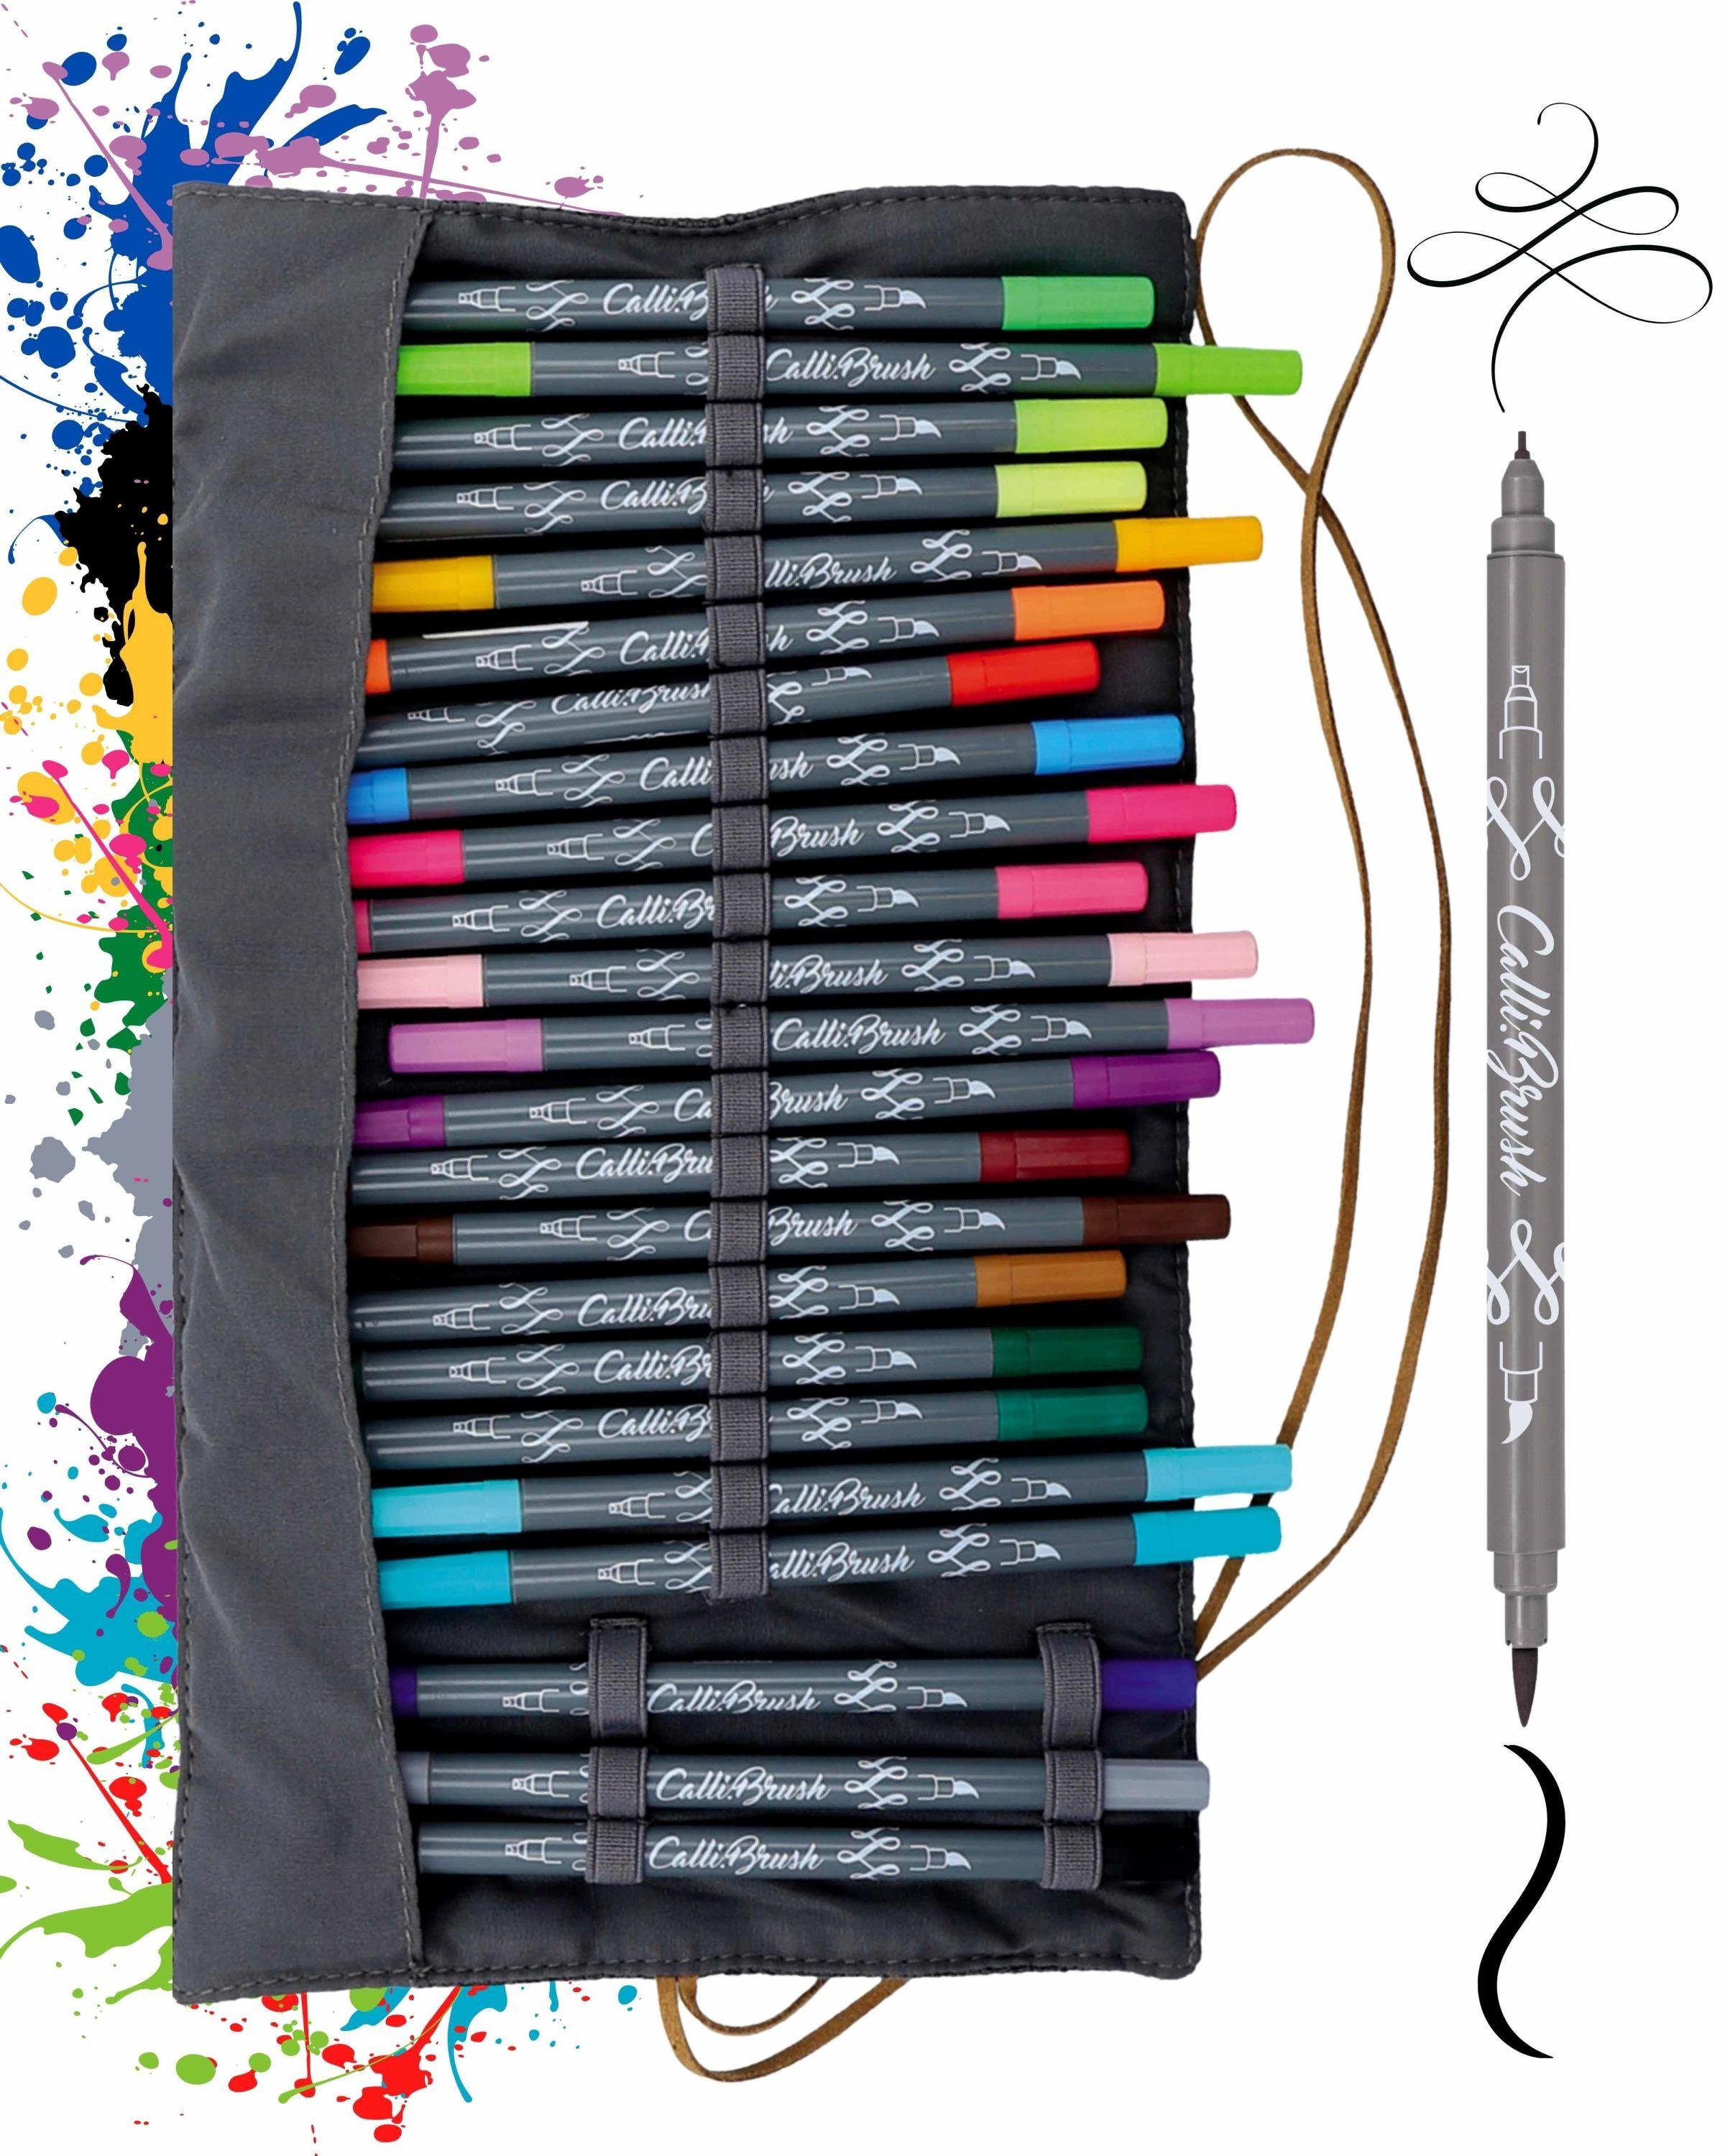 Online Pen Kalligraphie-Stift Calli.Brush, 24x Handlettering Stifte Set, bunte Brush Pens, verschiedene Spitzen